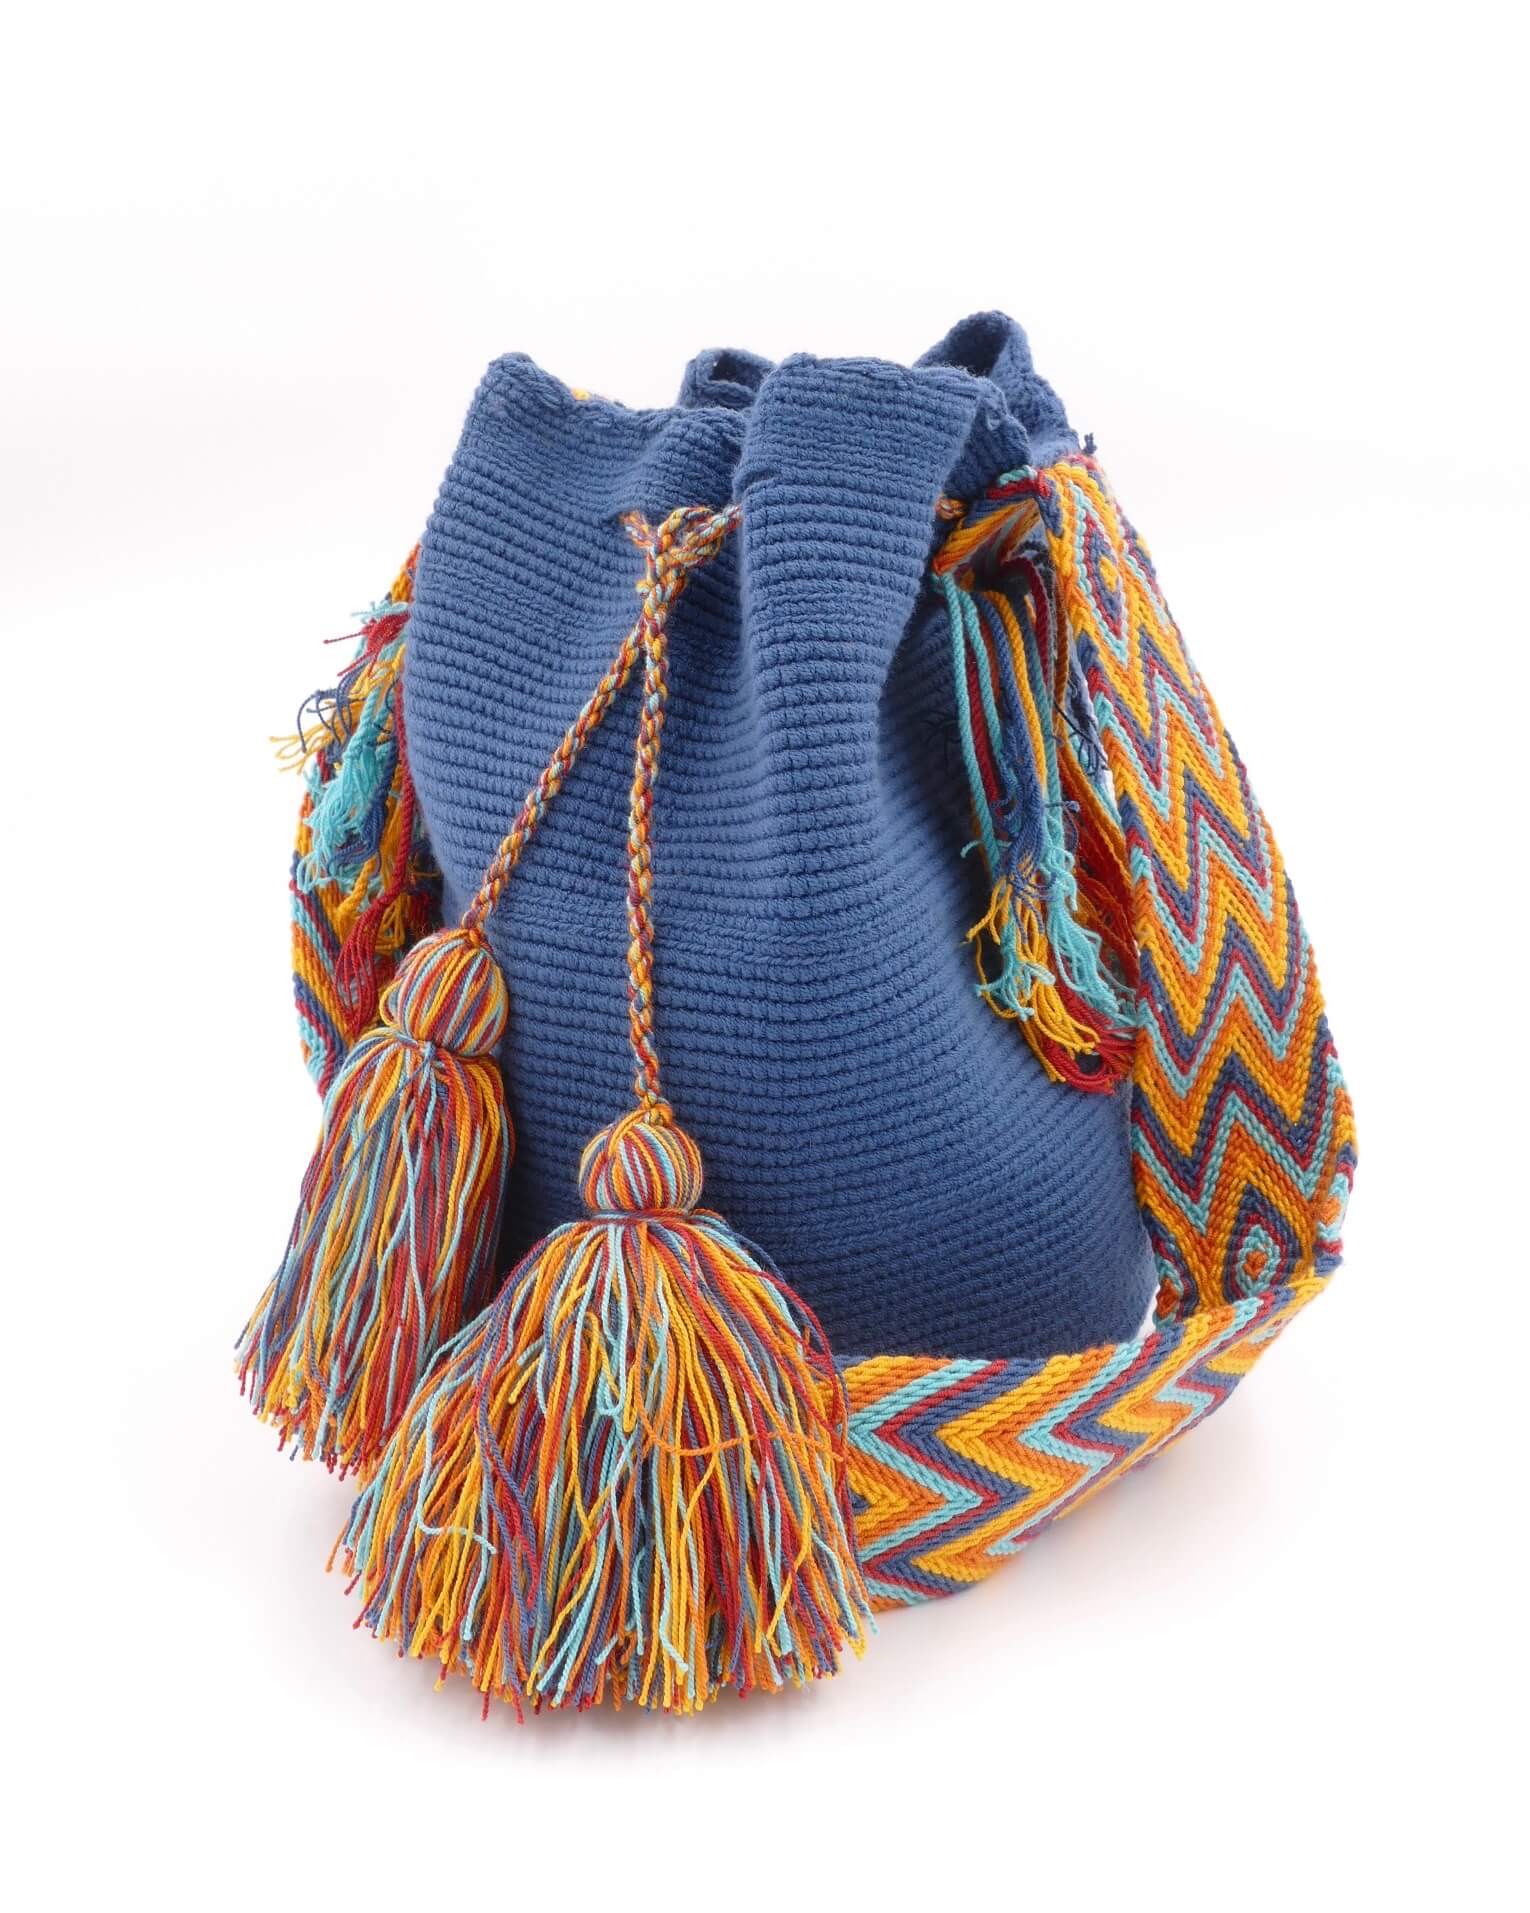 Wayuu Bag  Handmade in Colombia